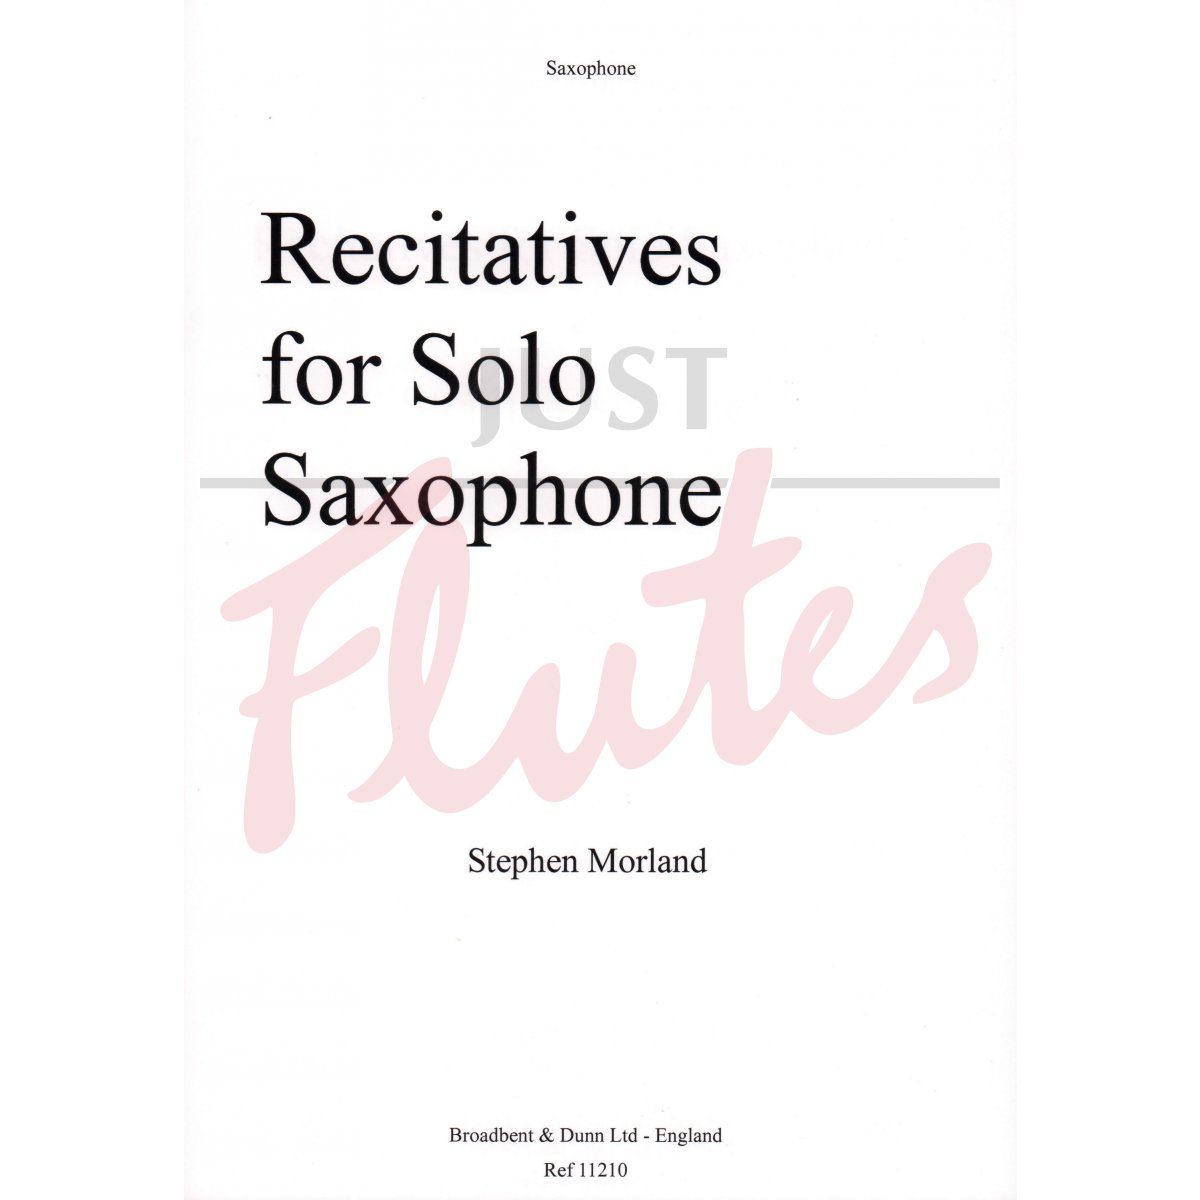 Recitatives for Solo Saxophone